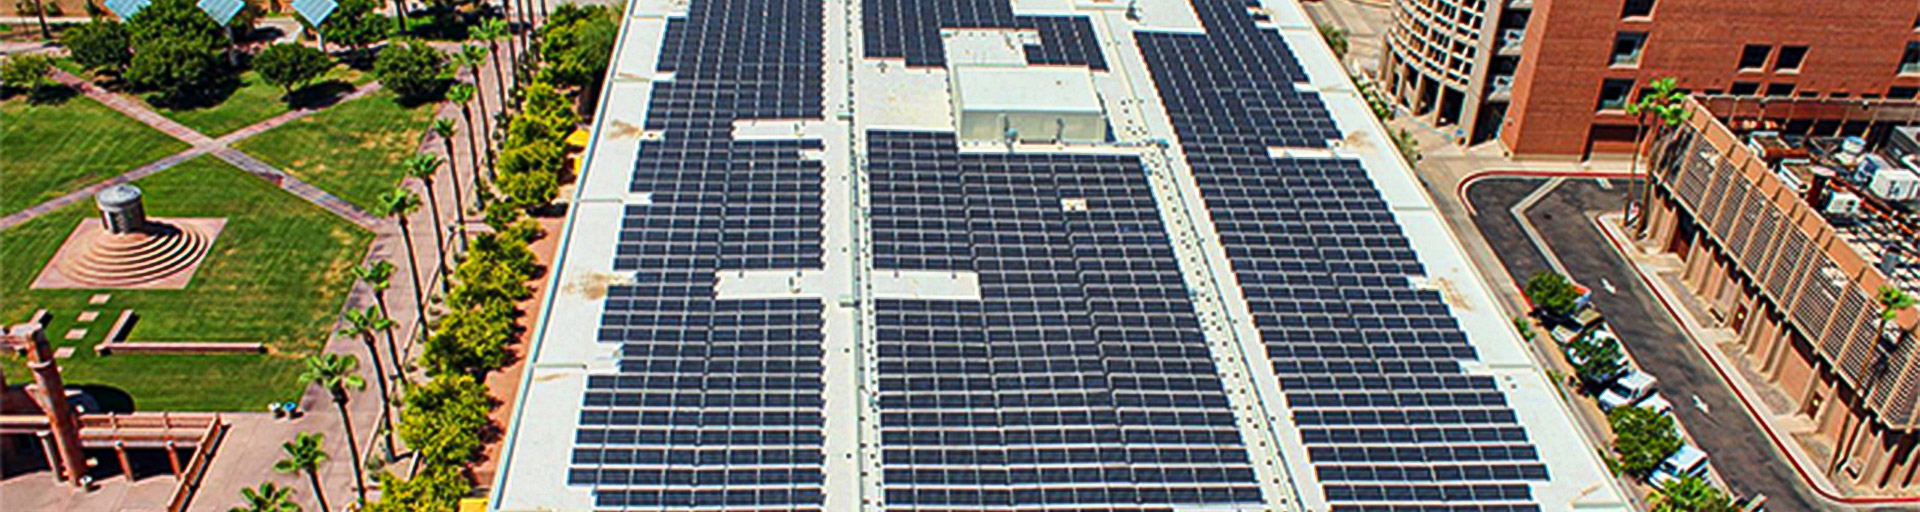 Charles Trumball Hayden Library solar panels - aerial